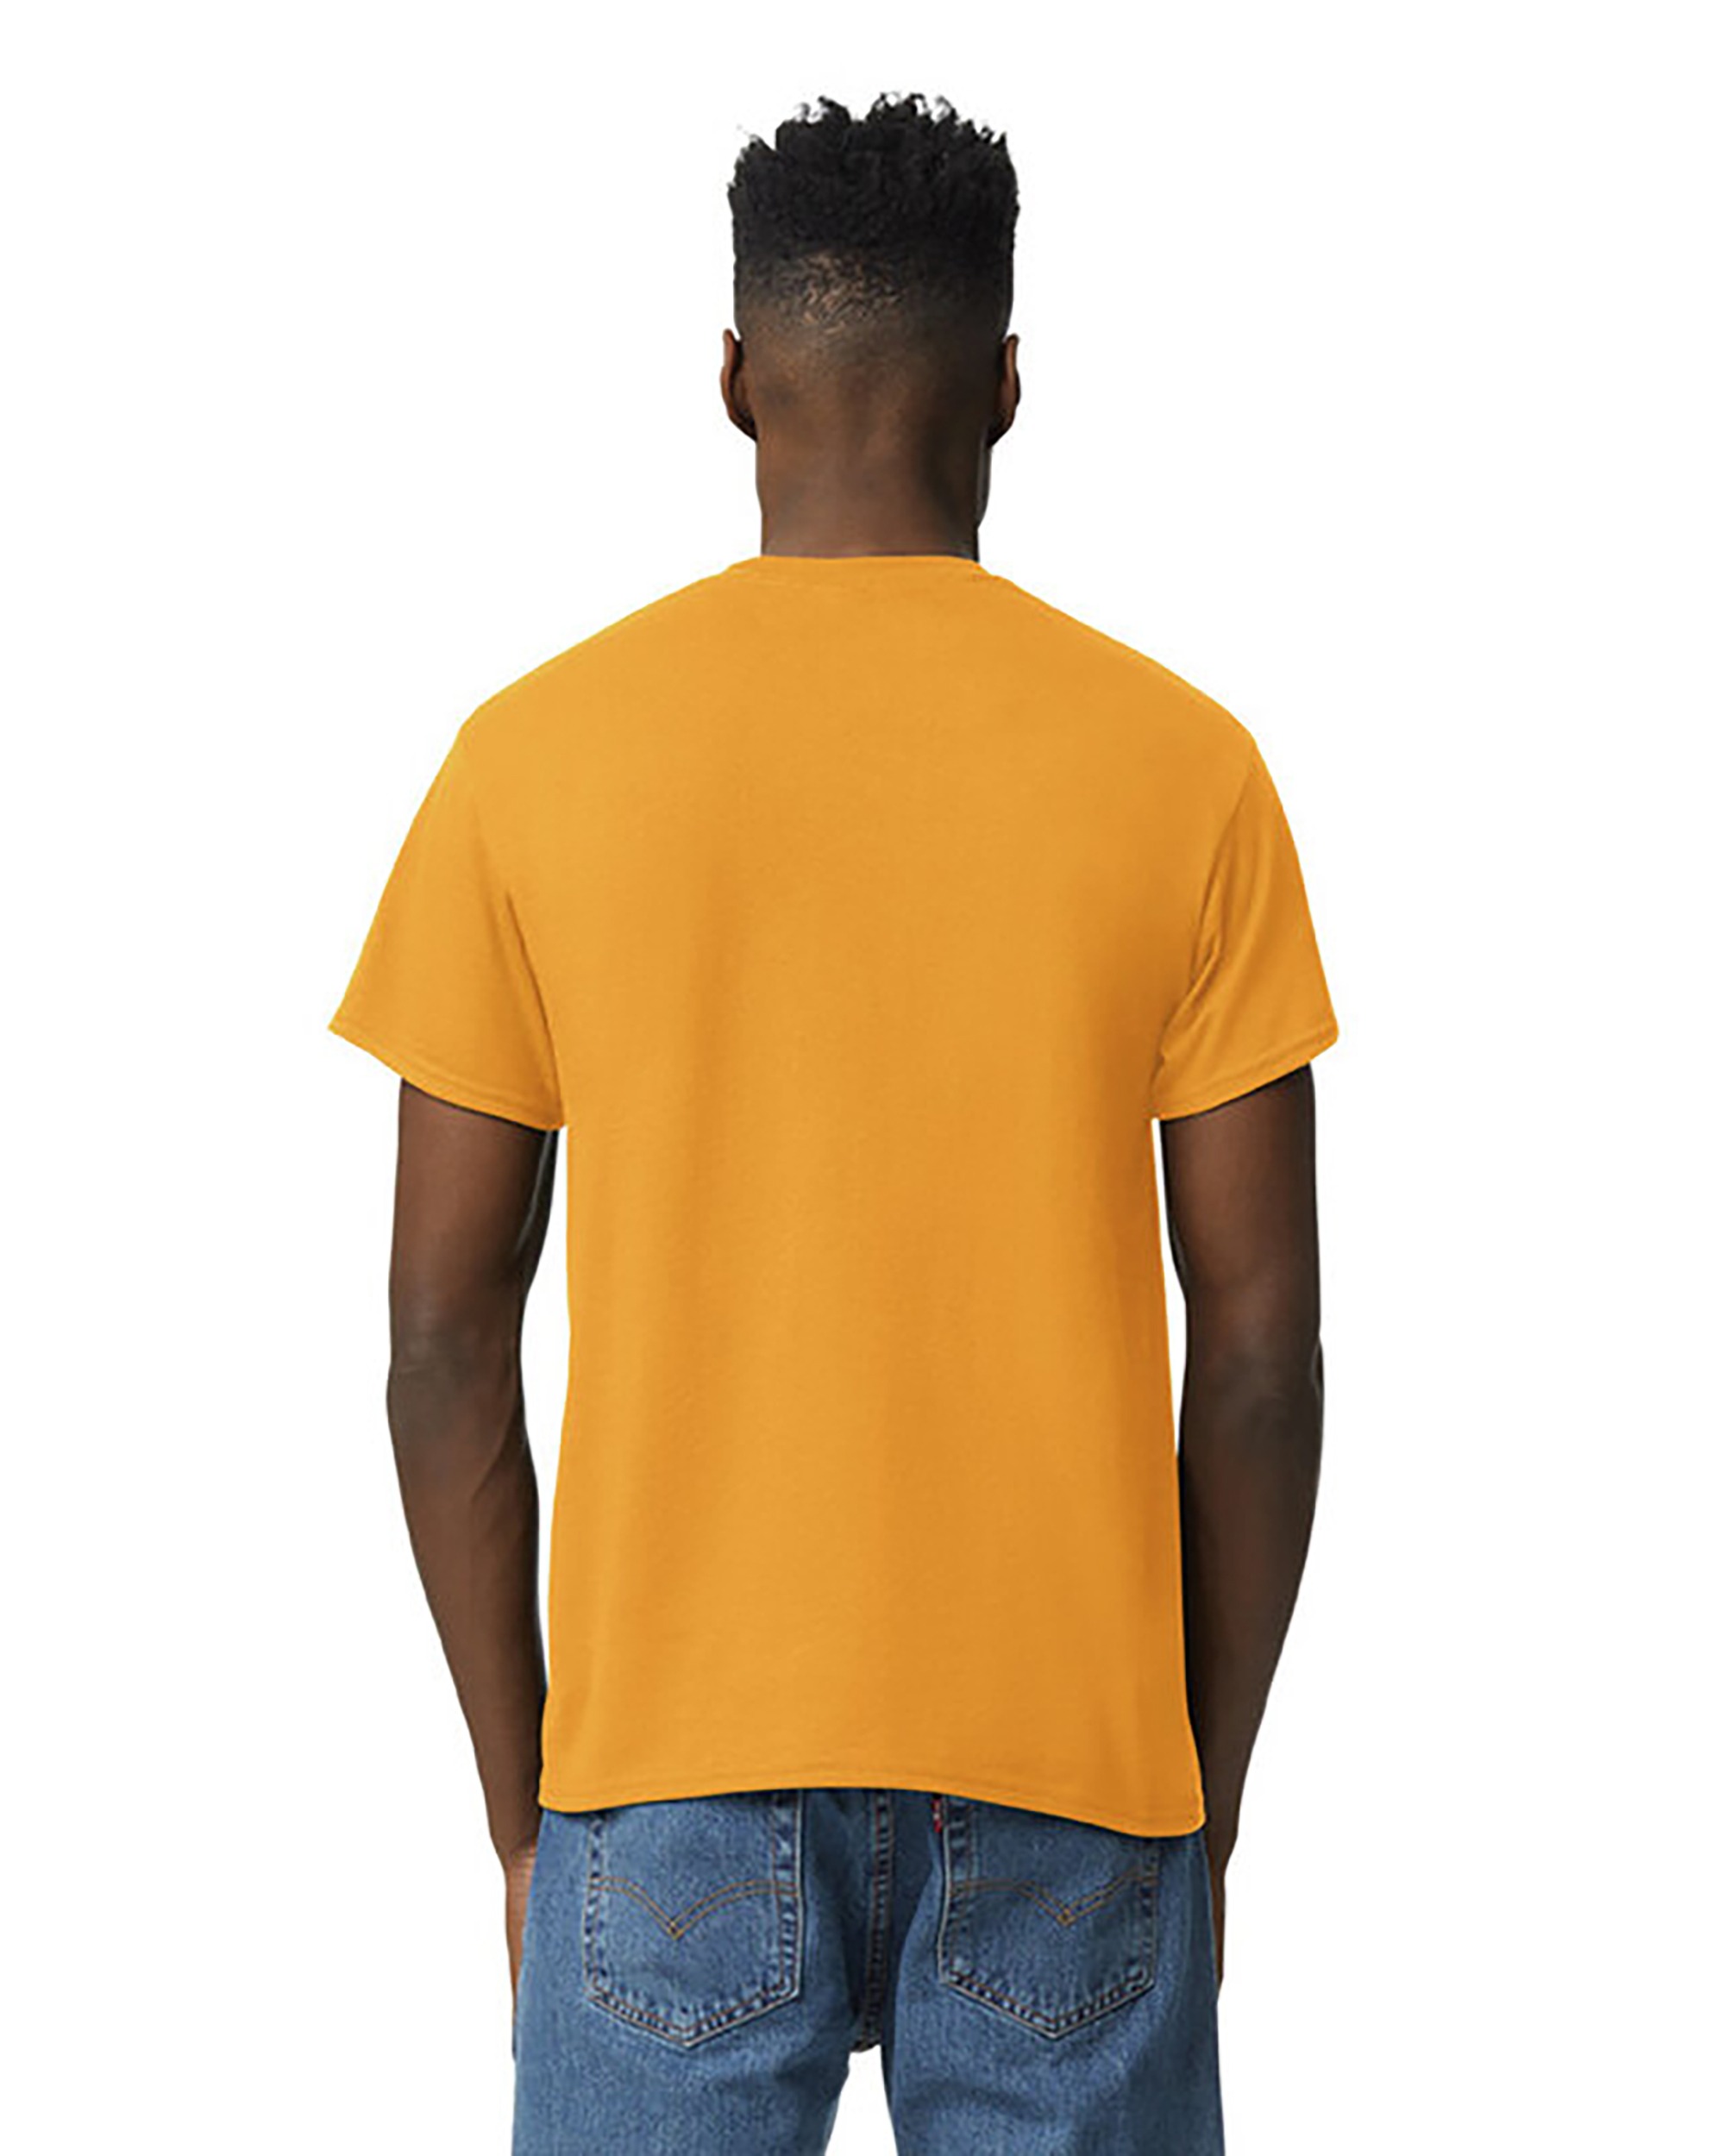 GD110 - DryBlend® Adult T-Shirt - One Stop